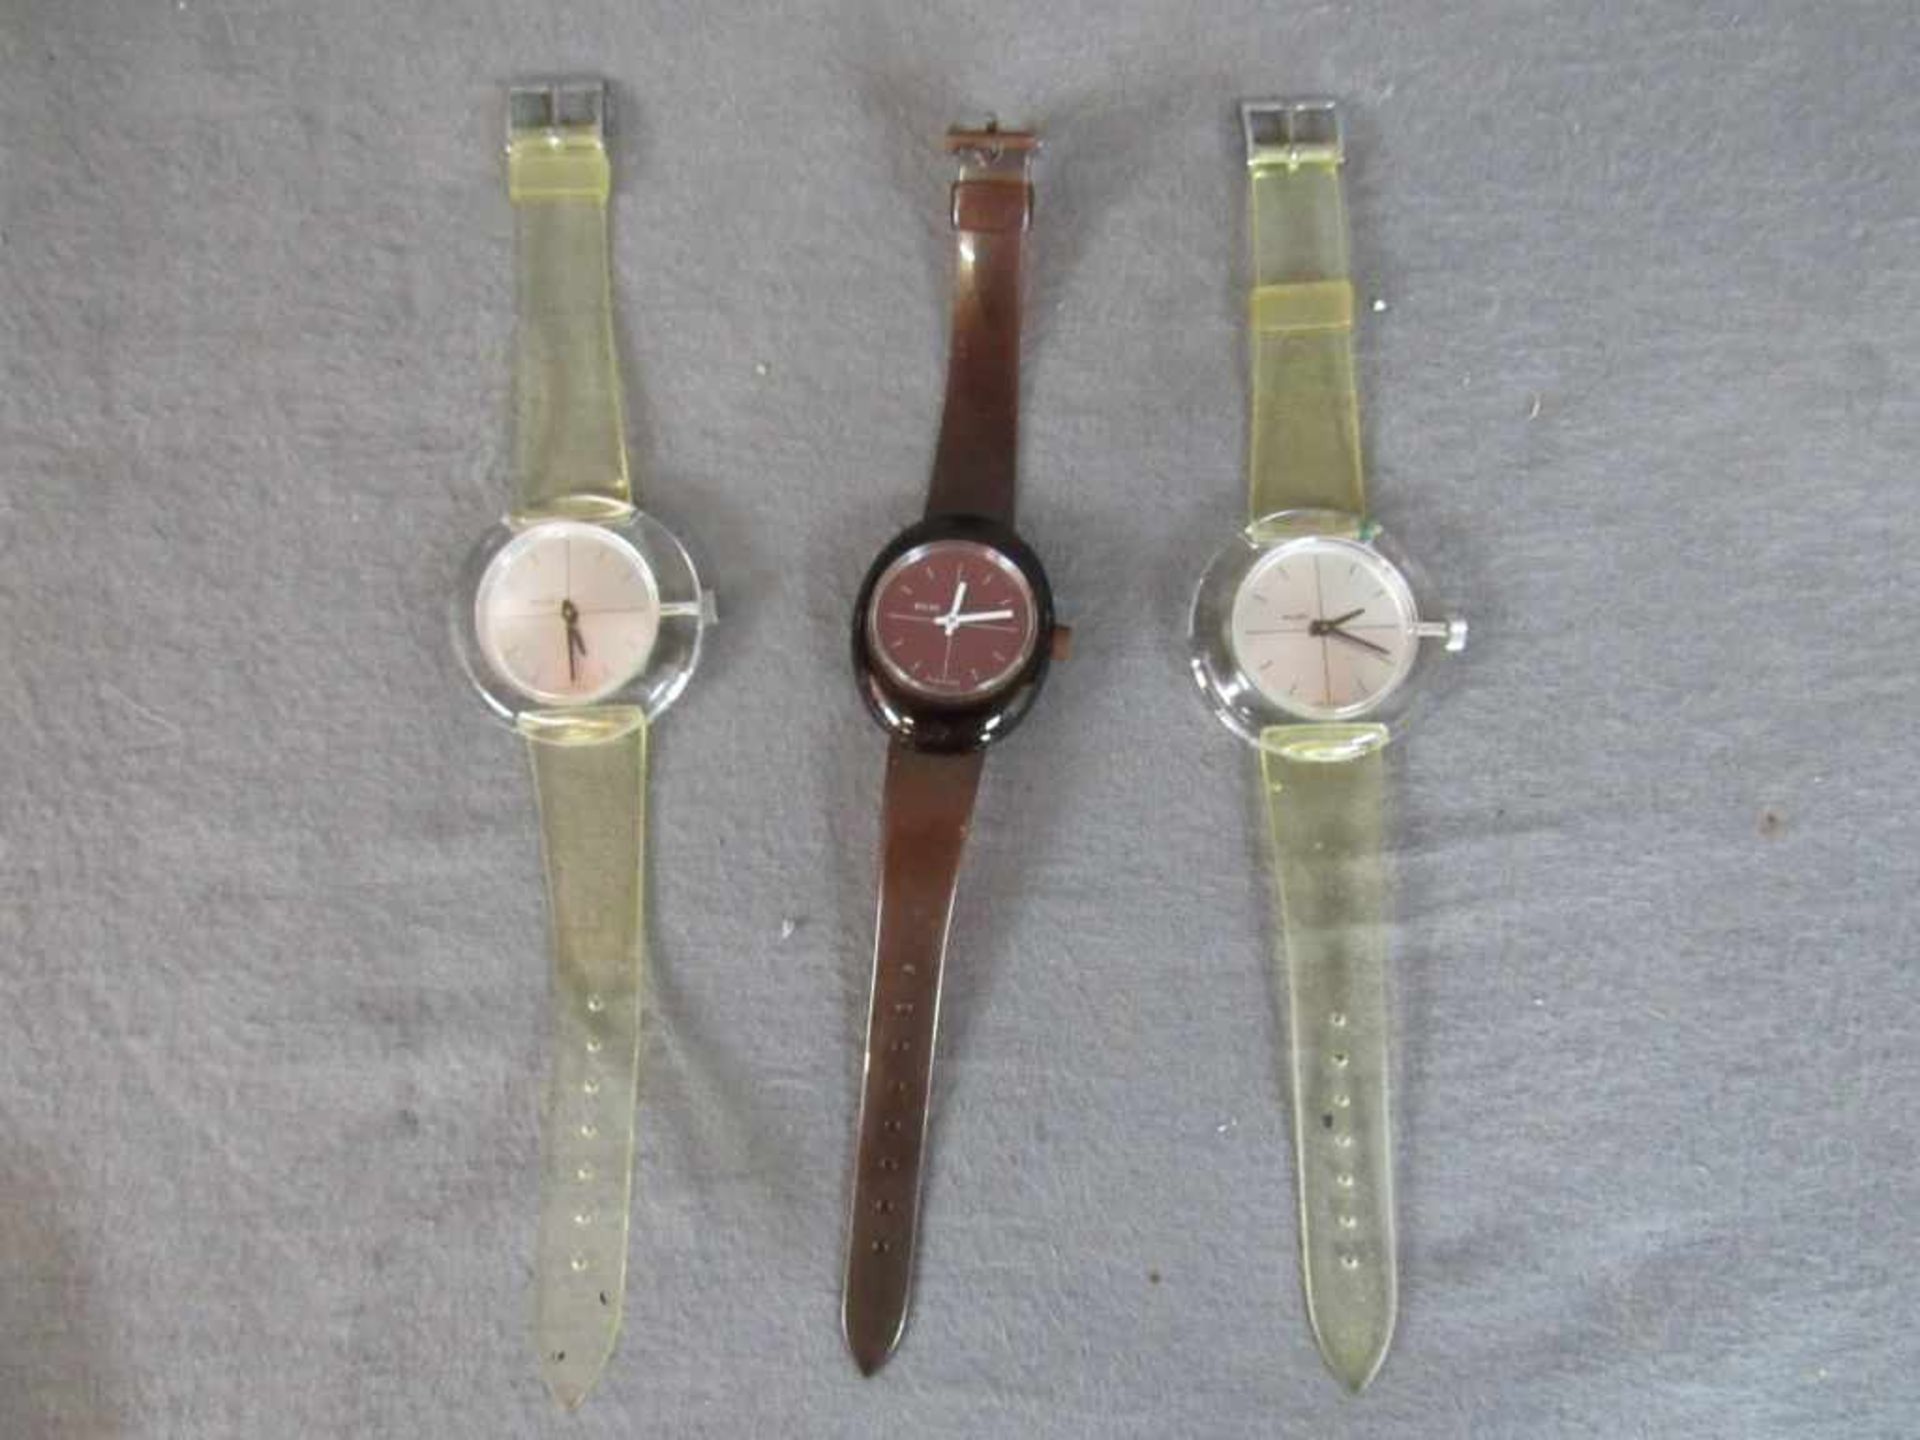 Drei Damenarmbanduhren Vintage Swiss made Buler 70er Jahre ungeprüft sehr rar- - -20.00 % buyer's